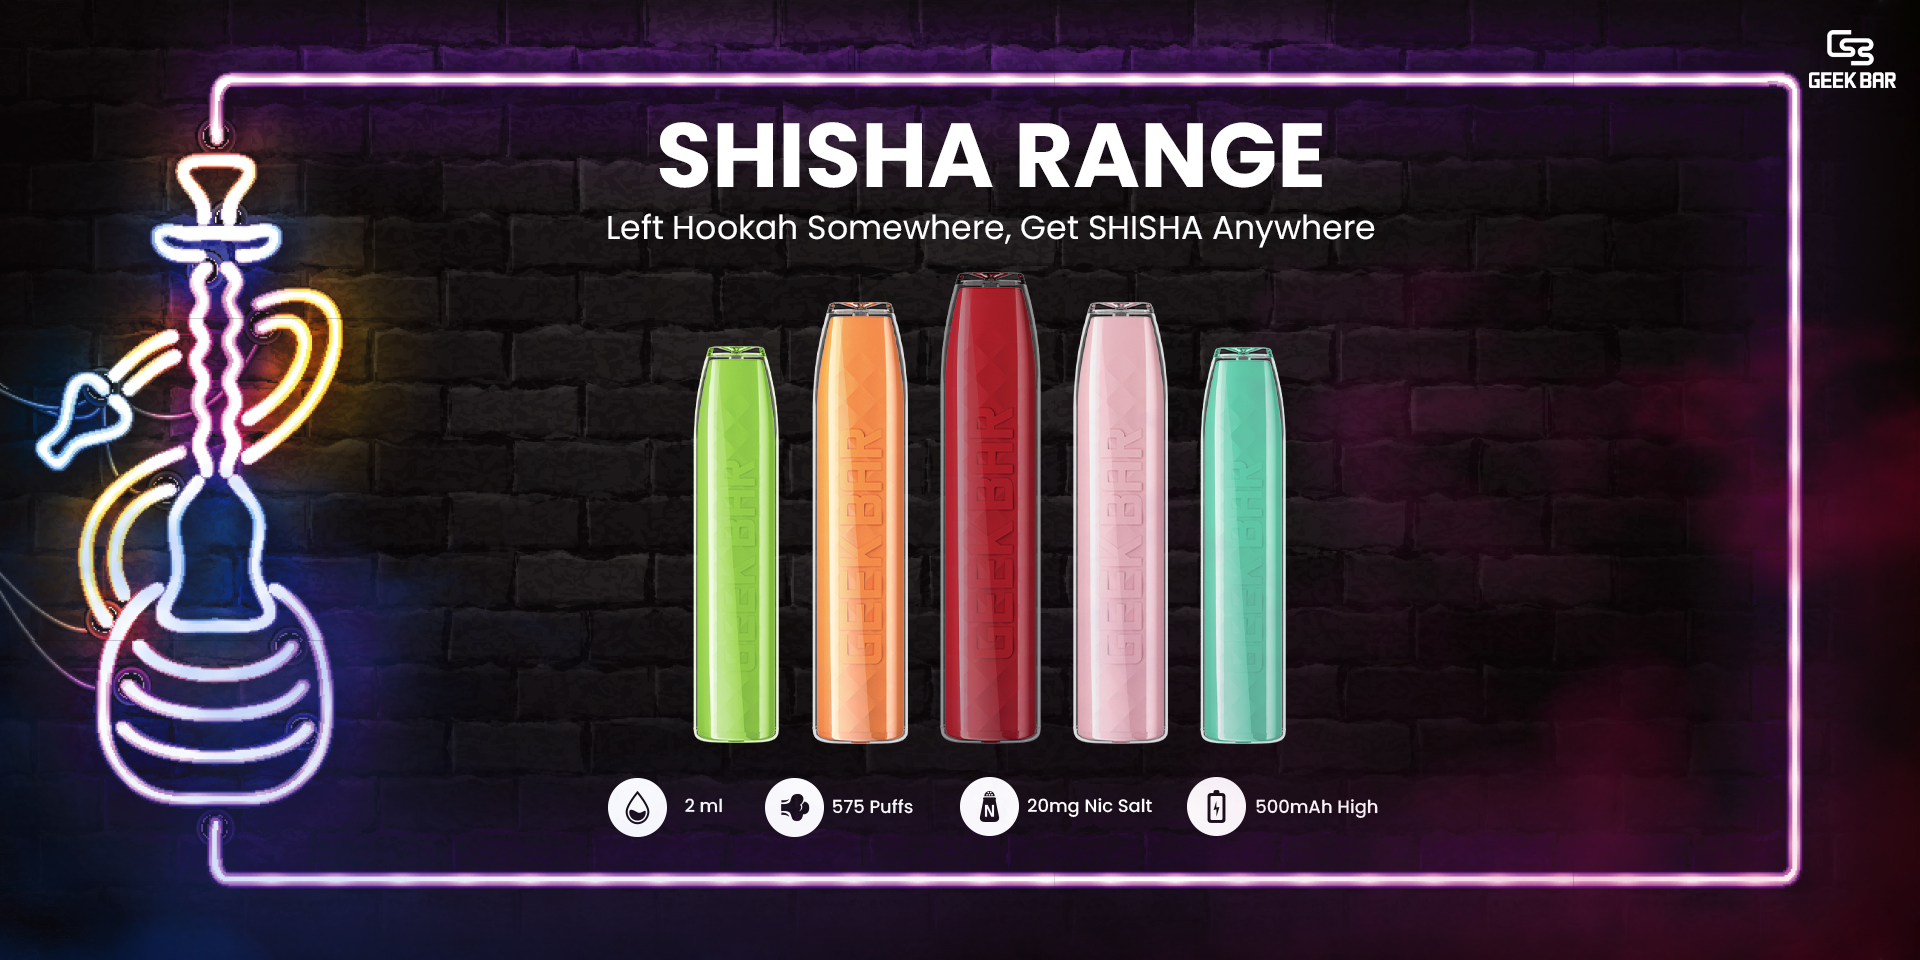 Geek Bar launches its first shisha-inspired vape range